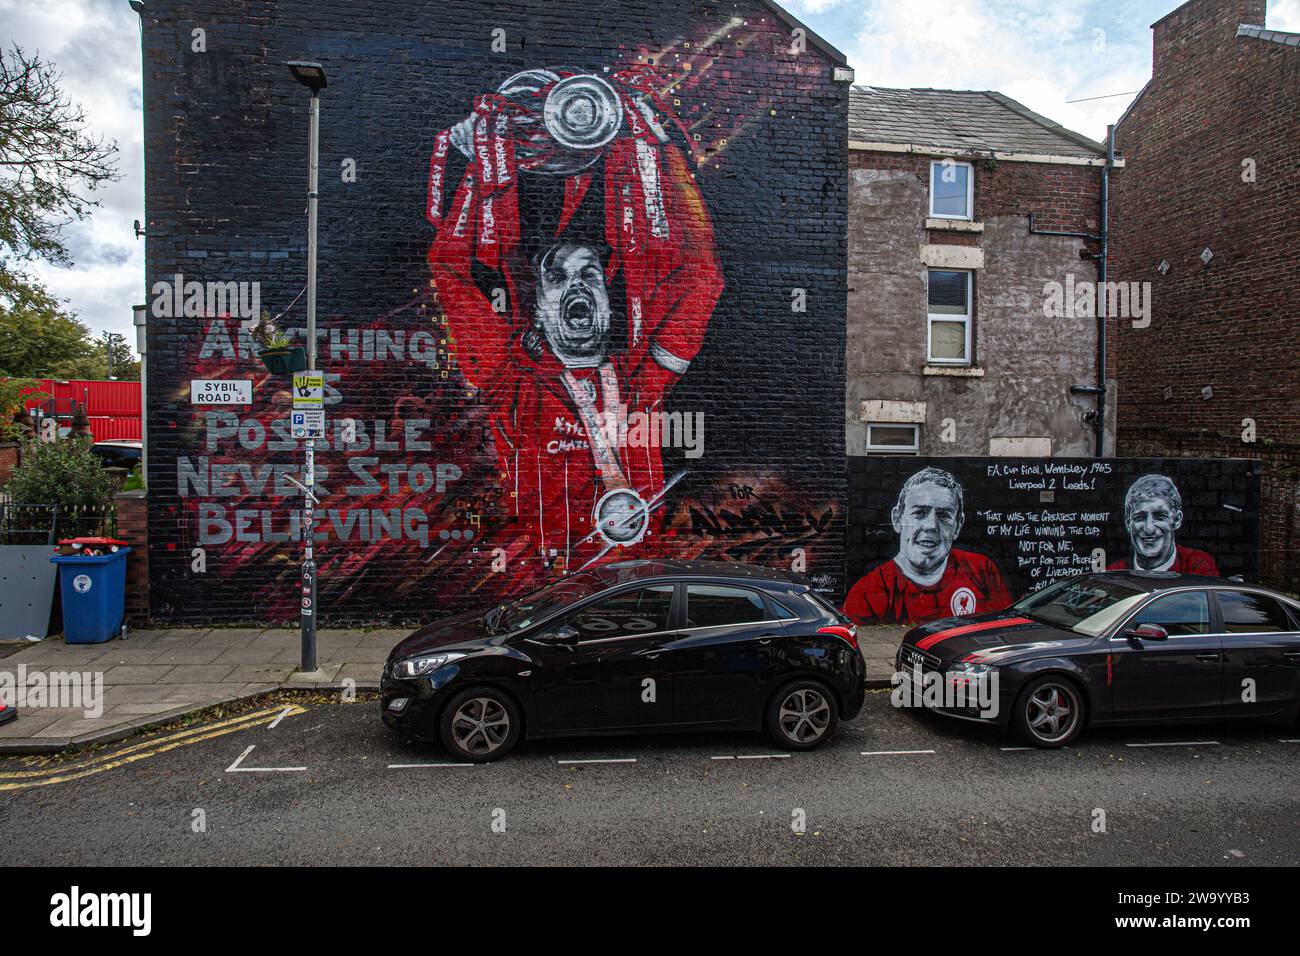 Mural of Jordan Henderson holding Premier League trophy on Sybil Road. Stock Photo